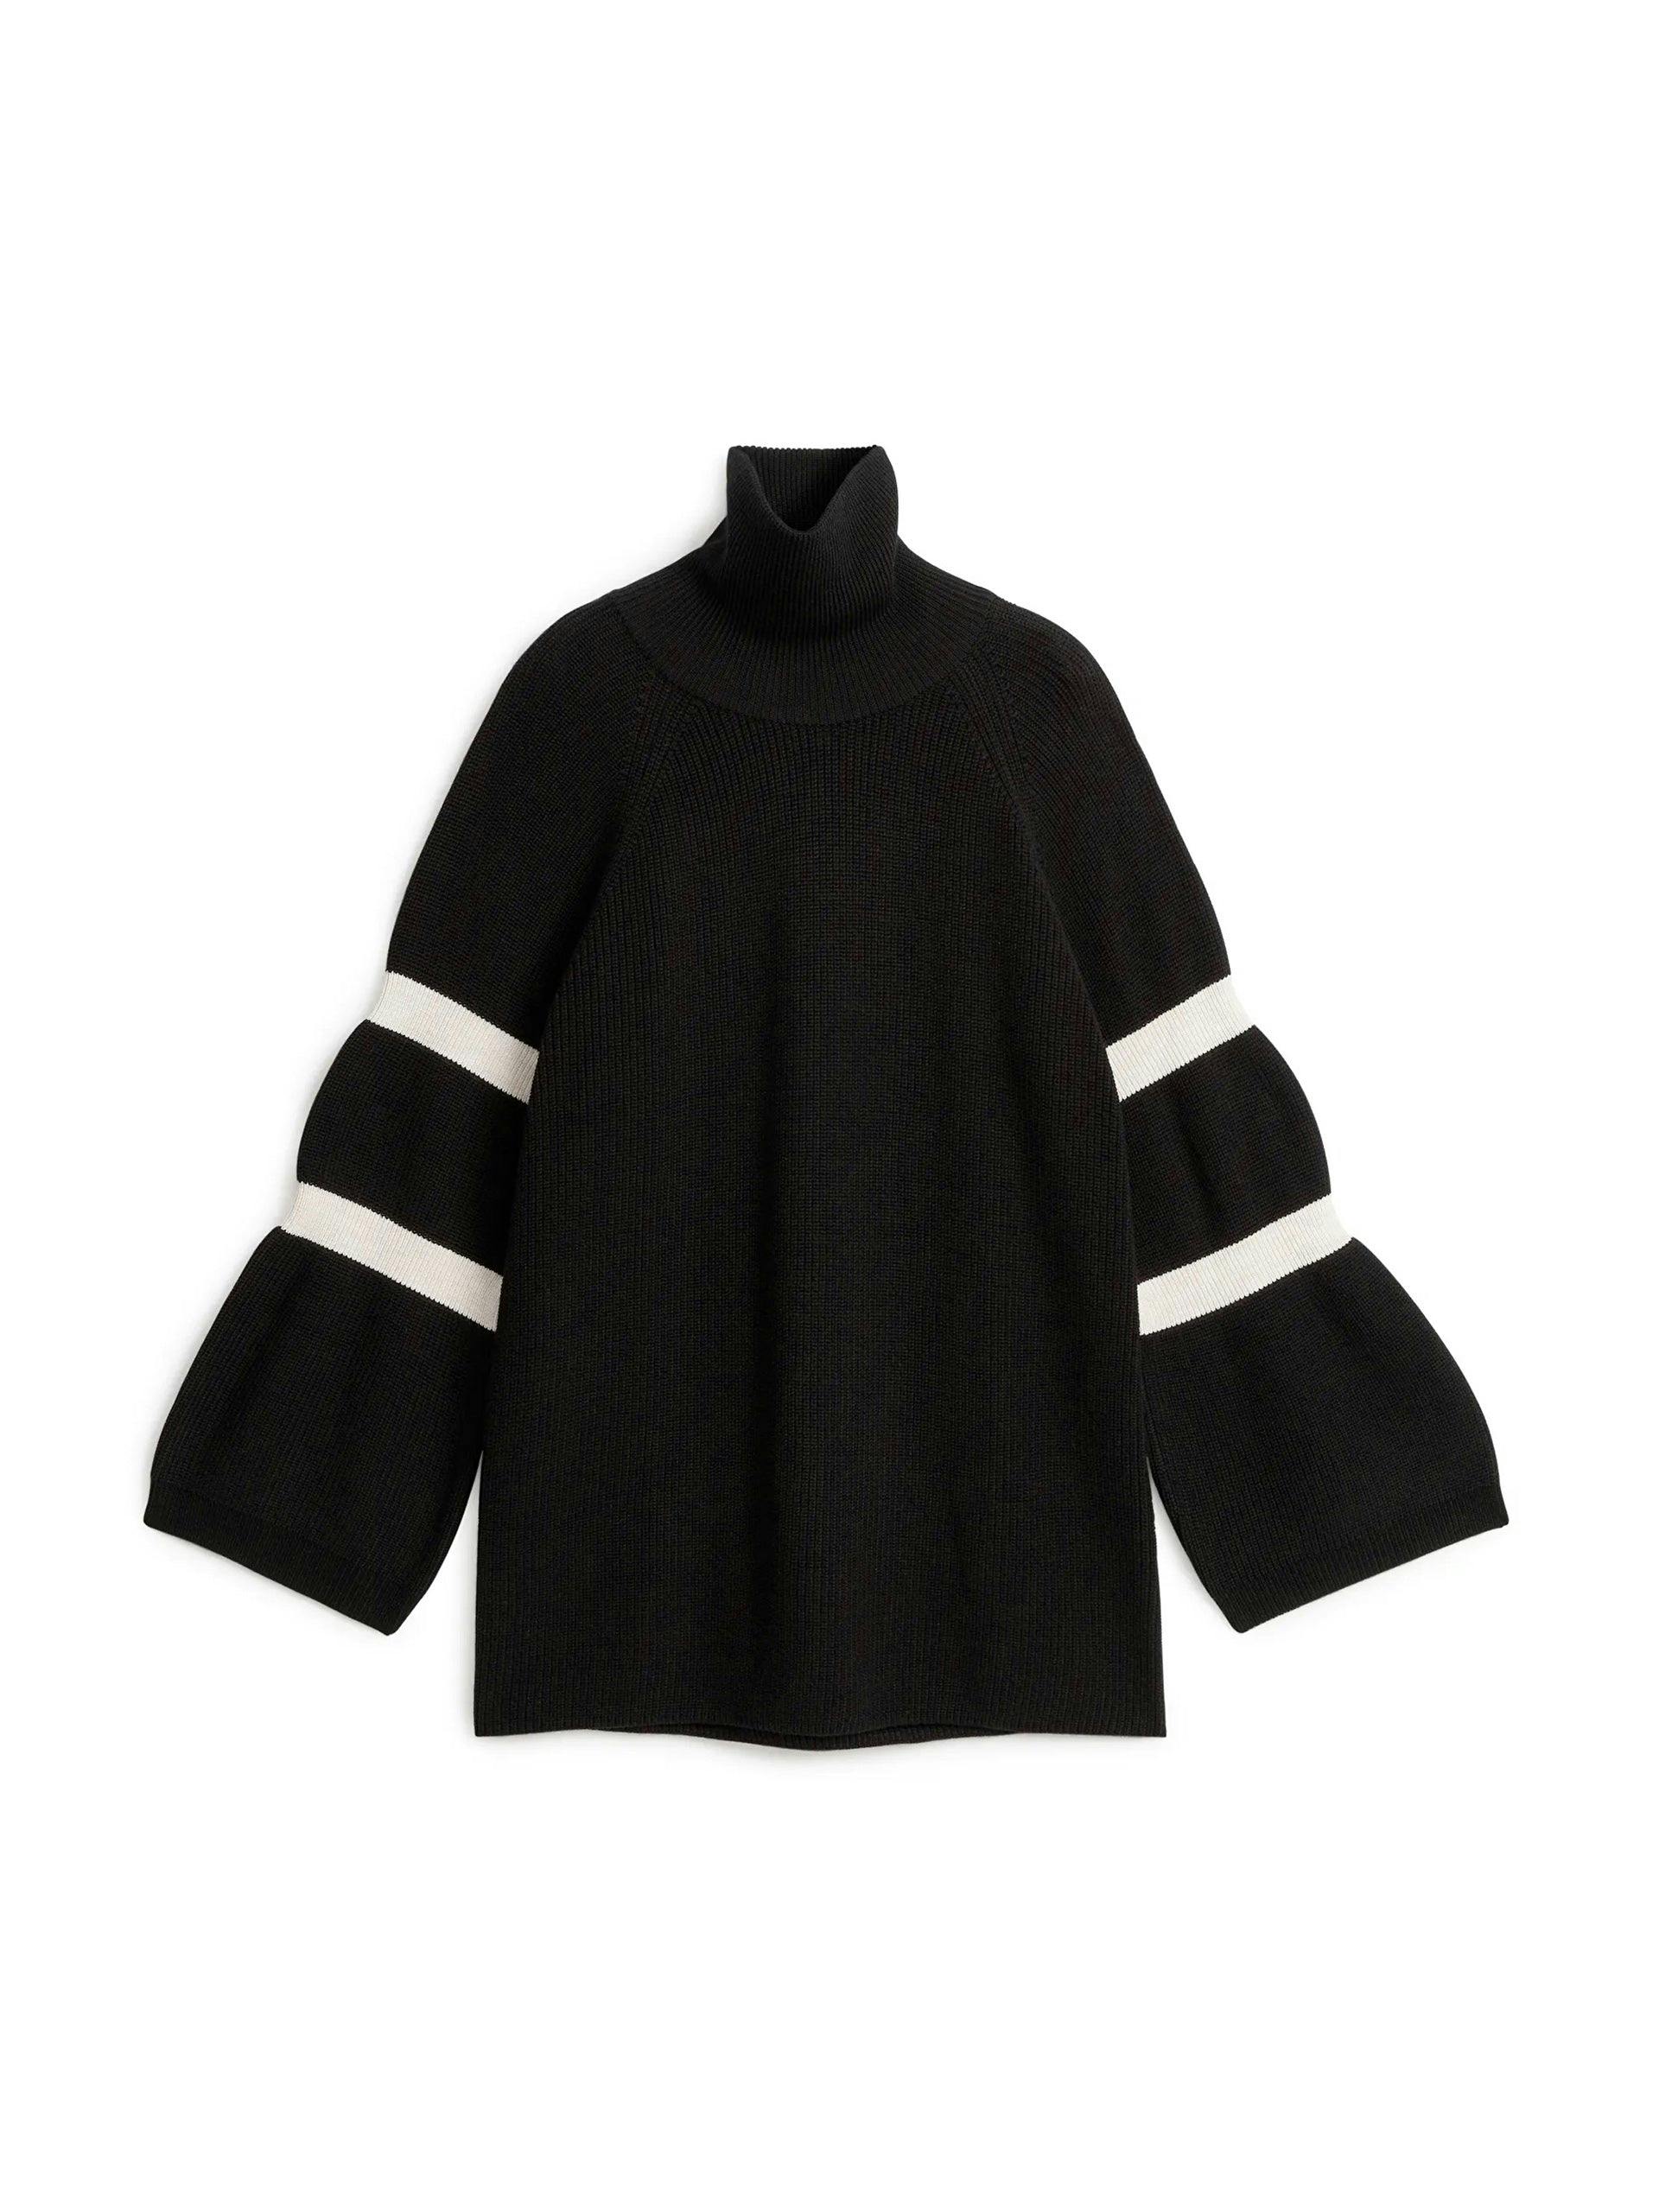 Wool blend black jumper with white stripes